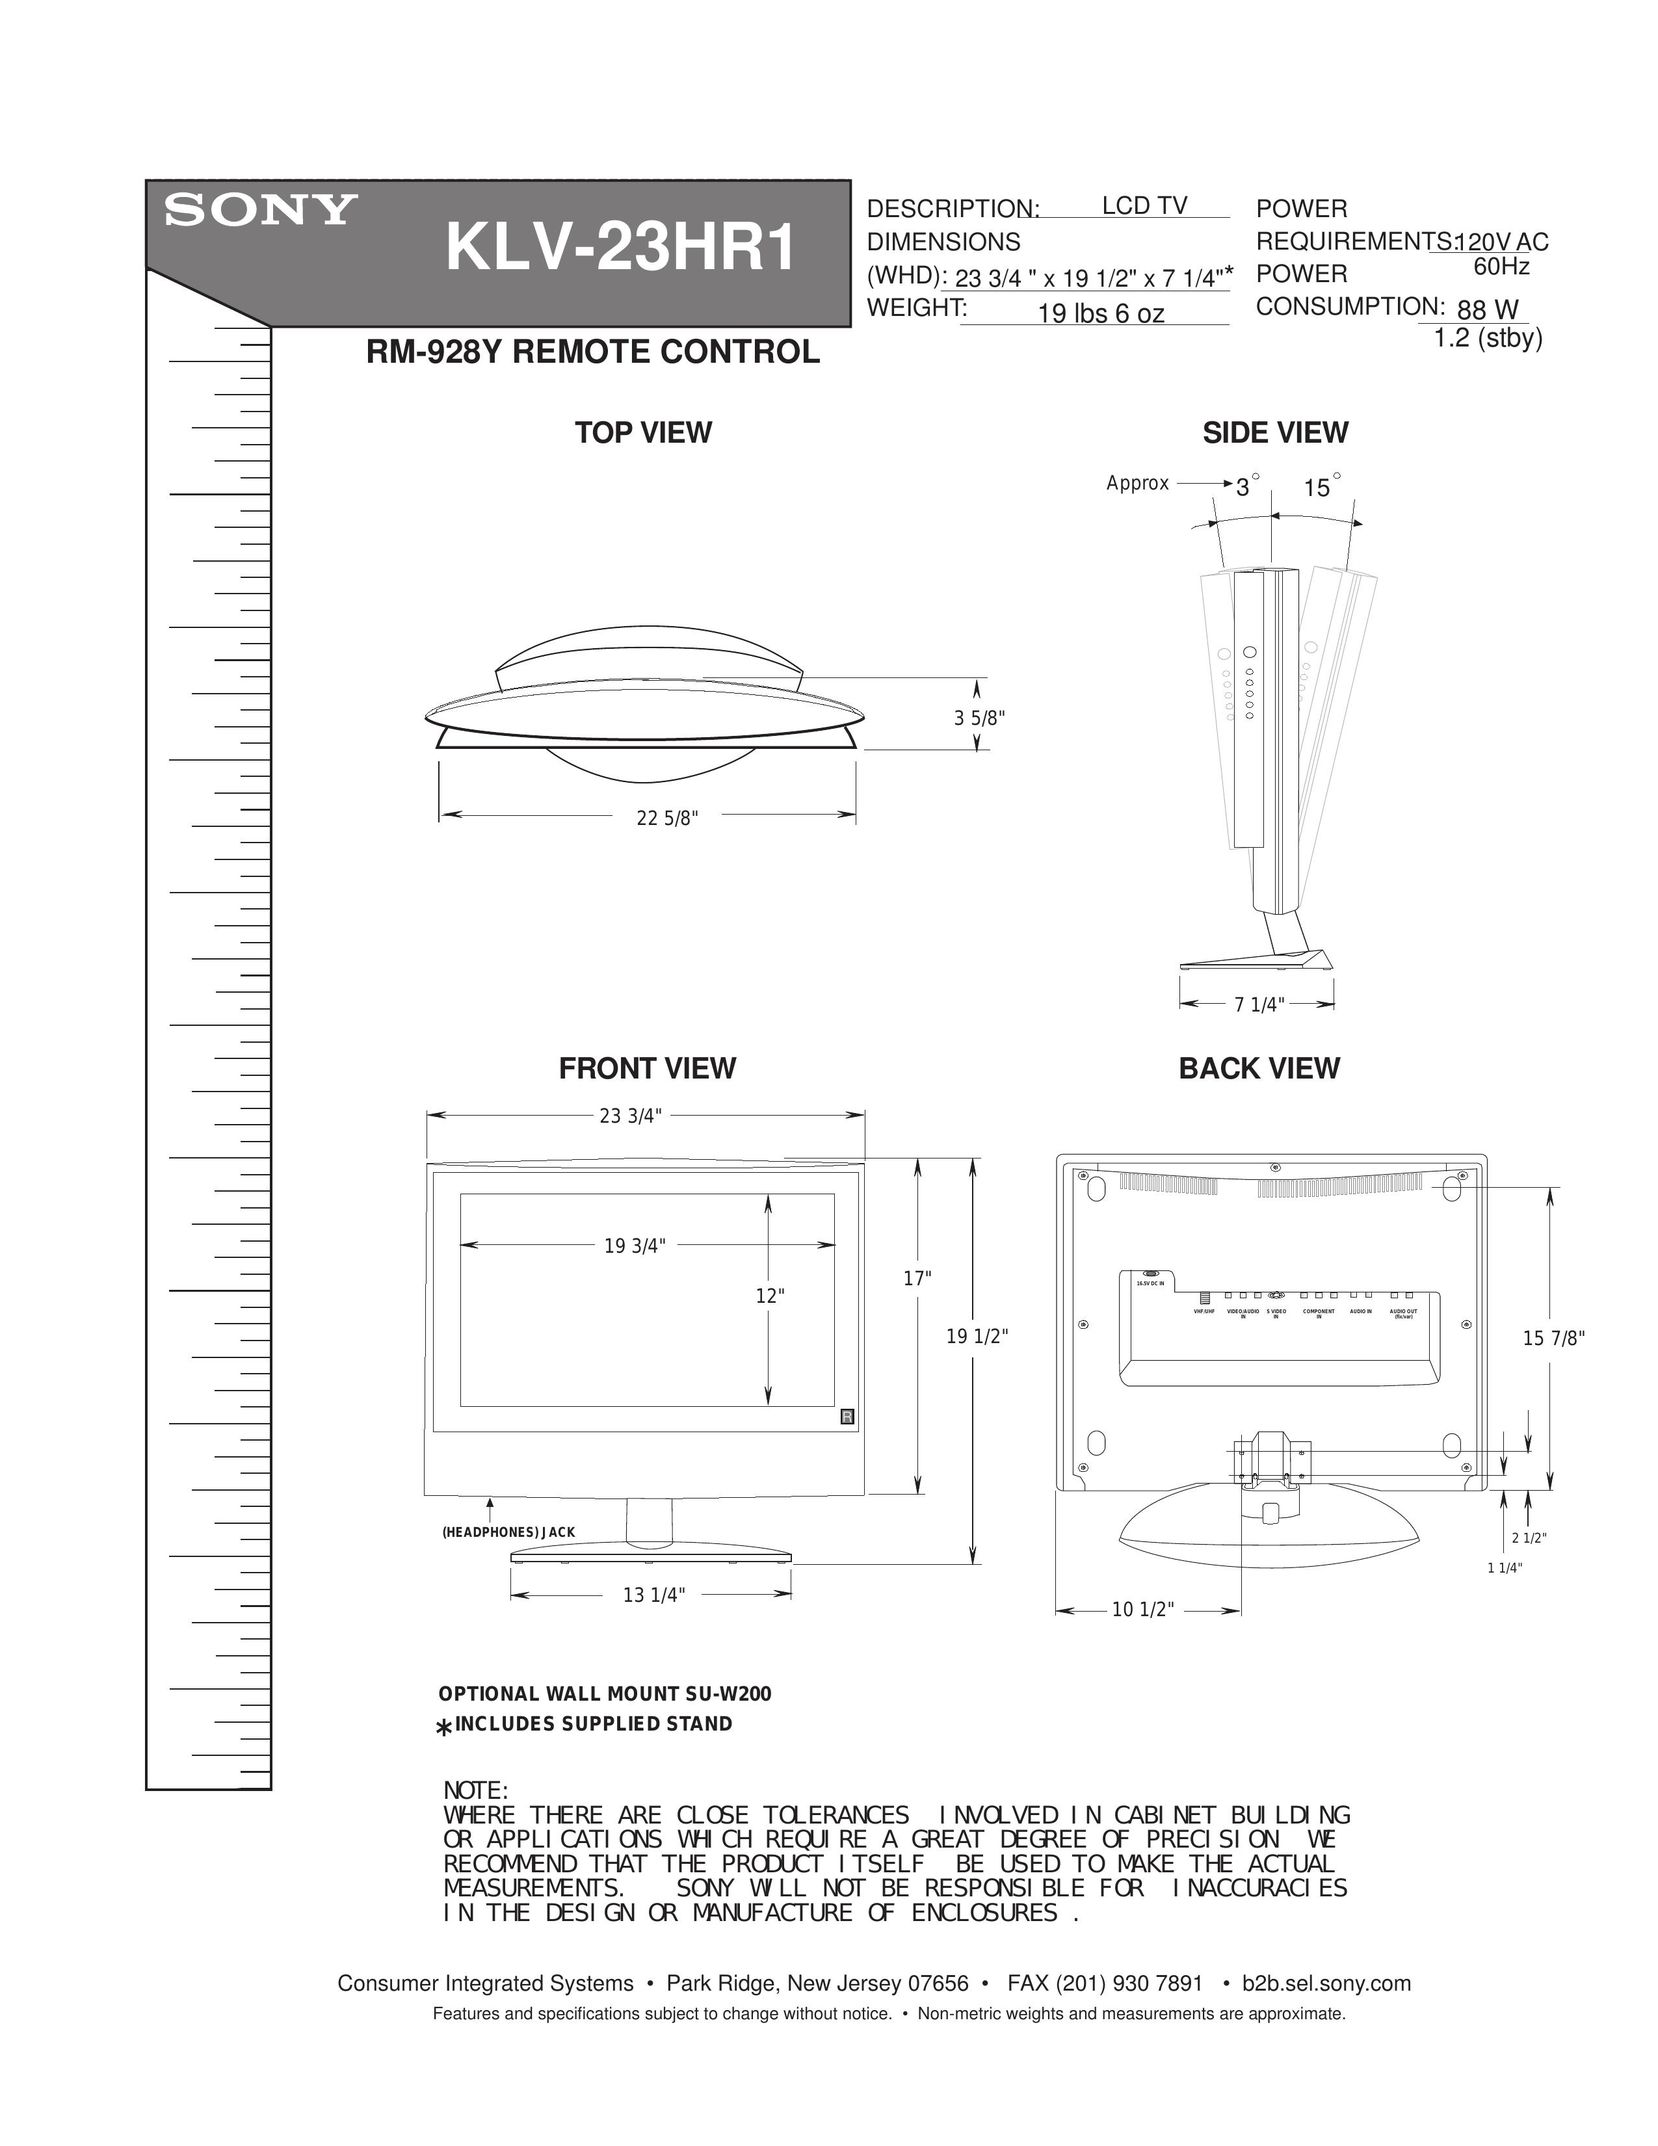 Sony KLV-23HR1 Universal Remote User Manual